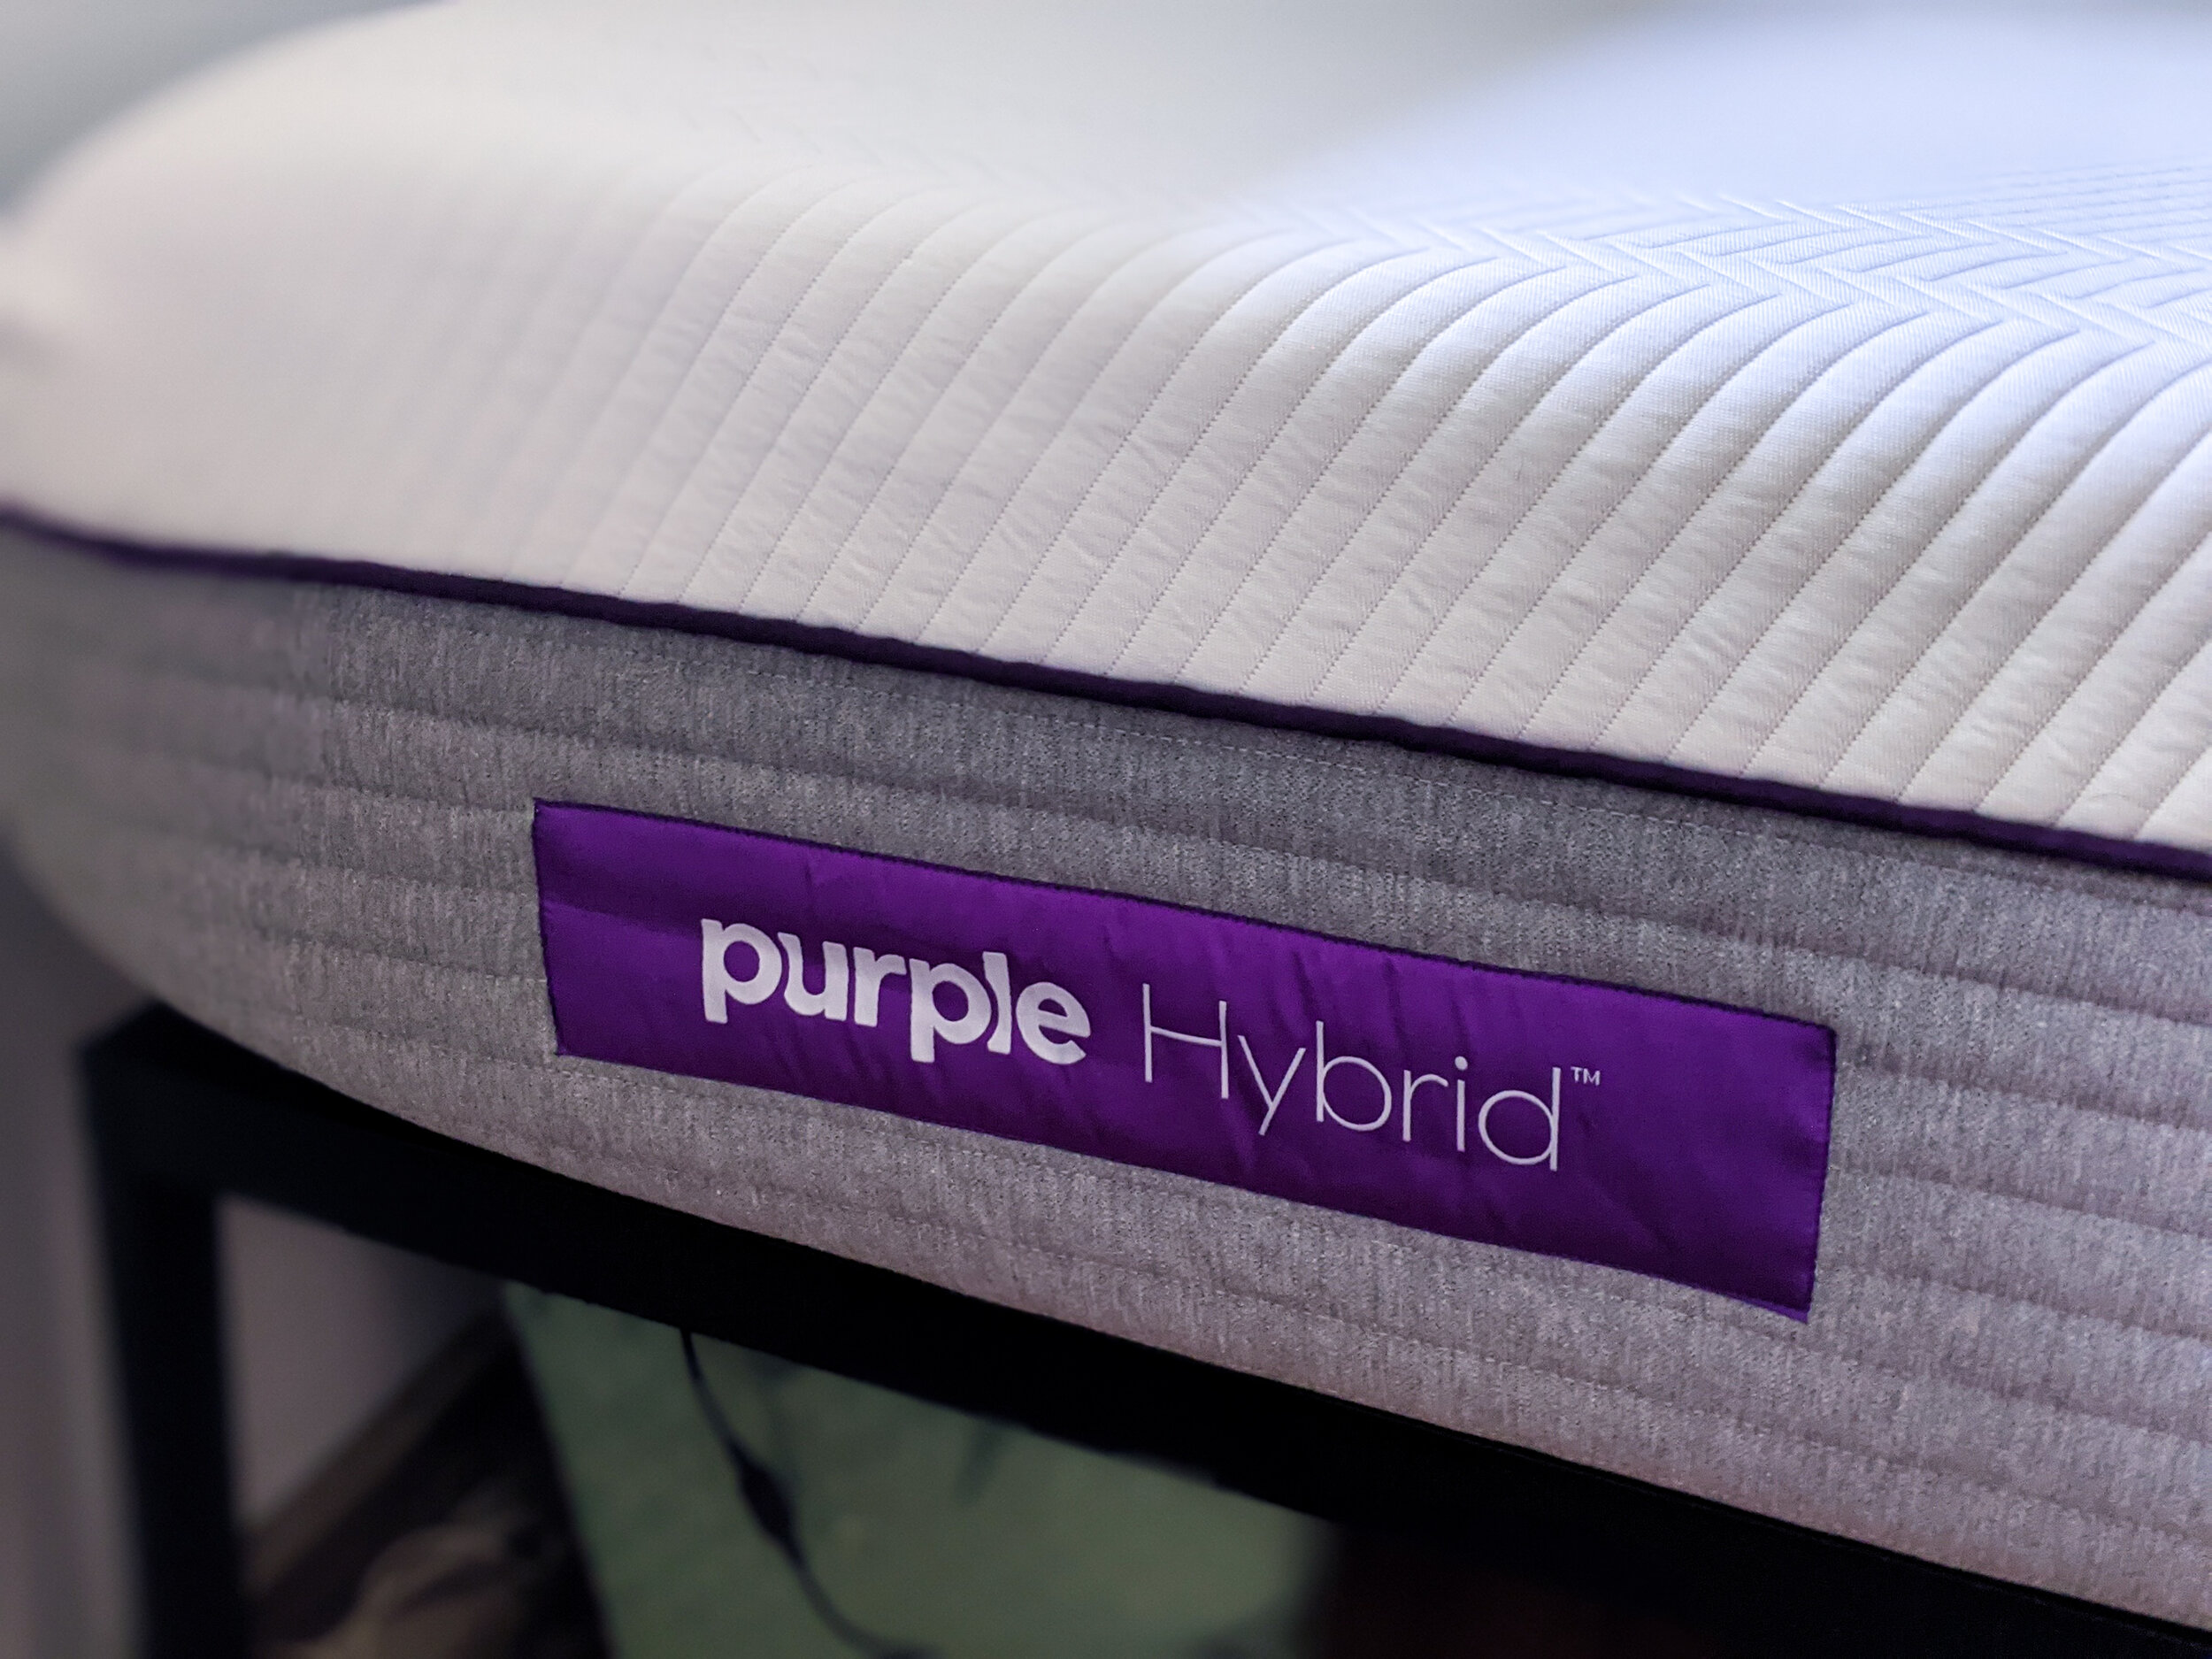 the purple mattress vs purple hybrid